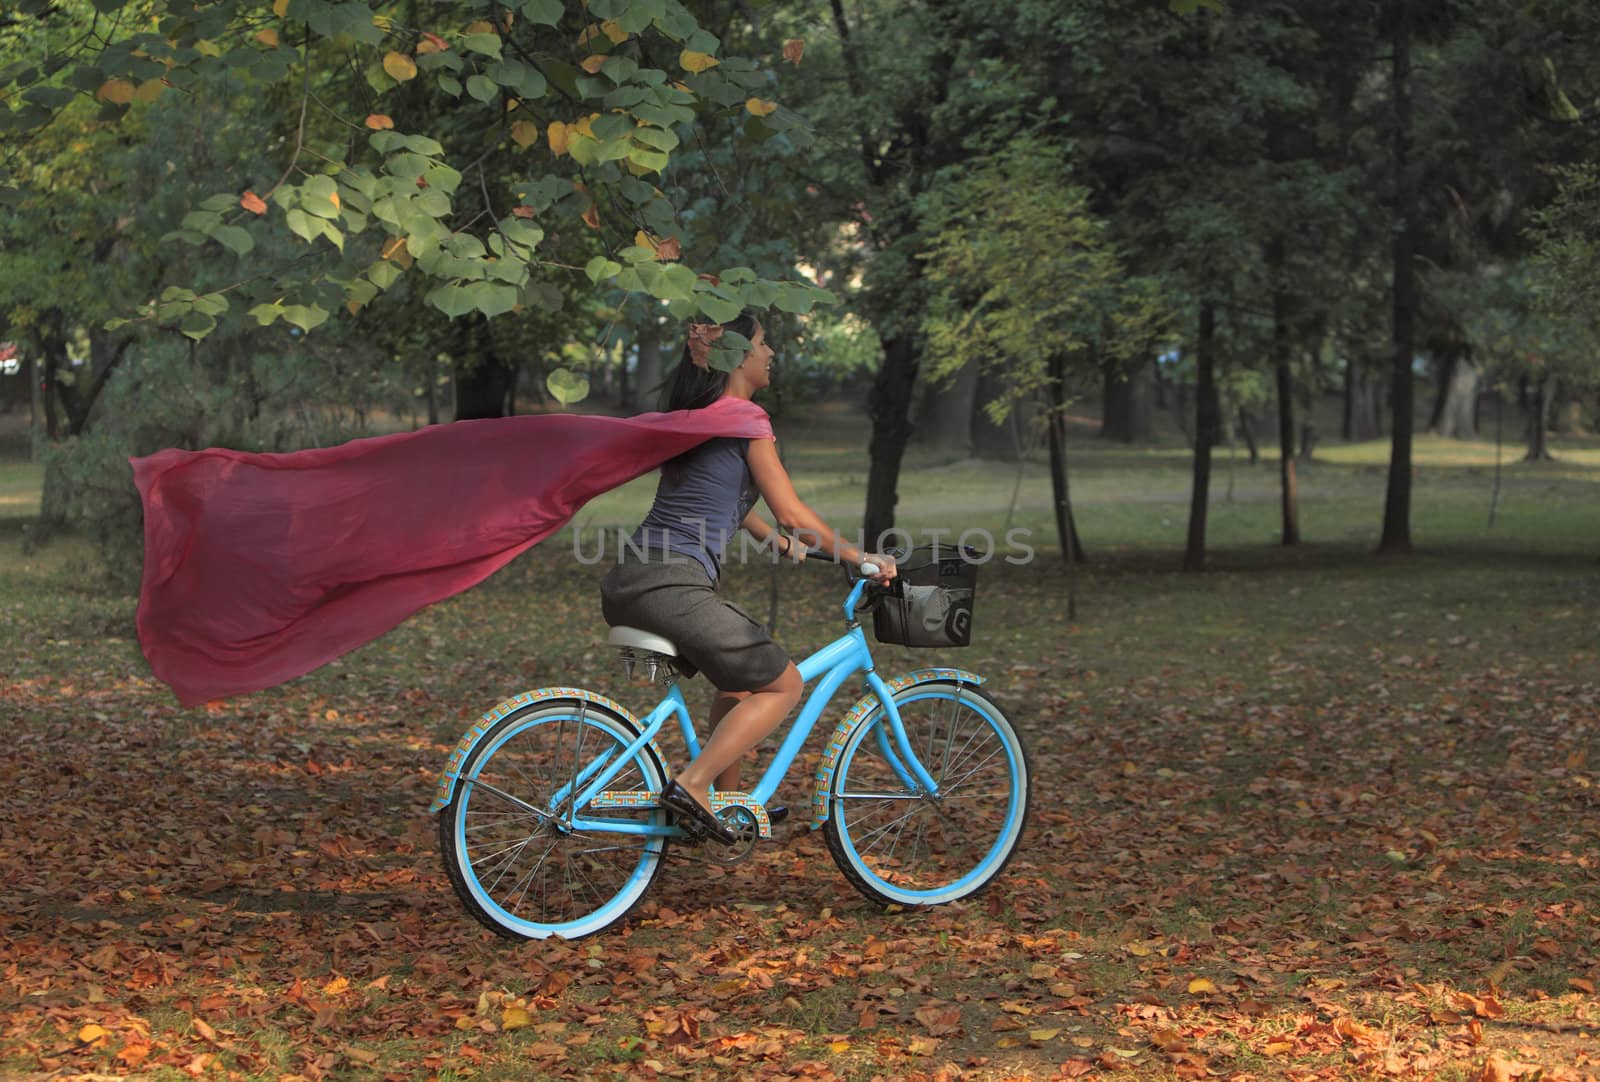 Bicycle fun by RazvanPhotography